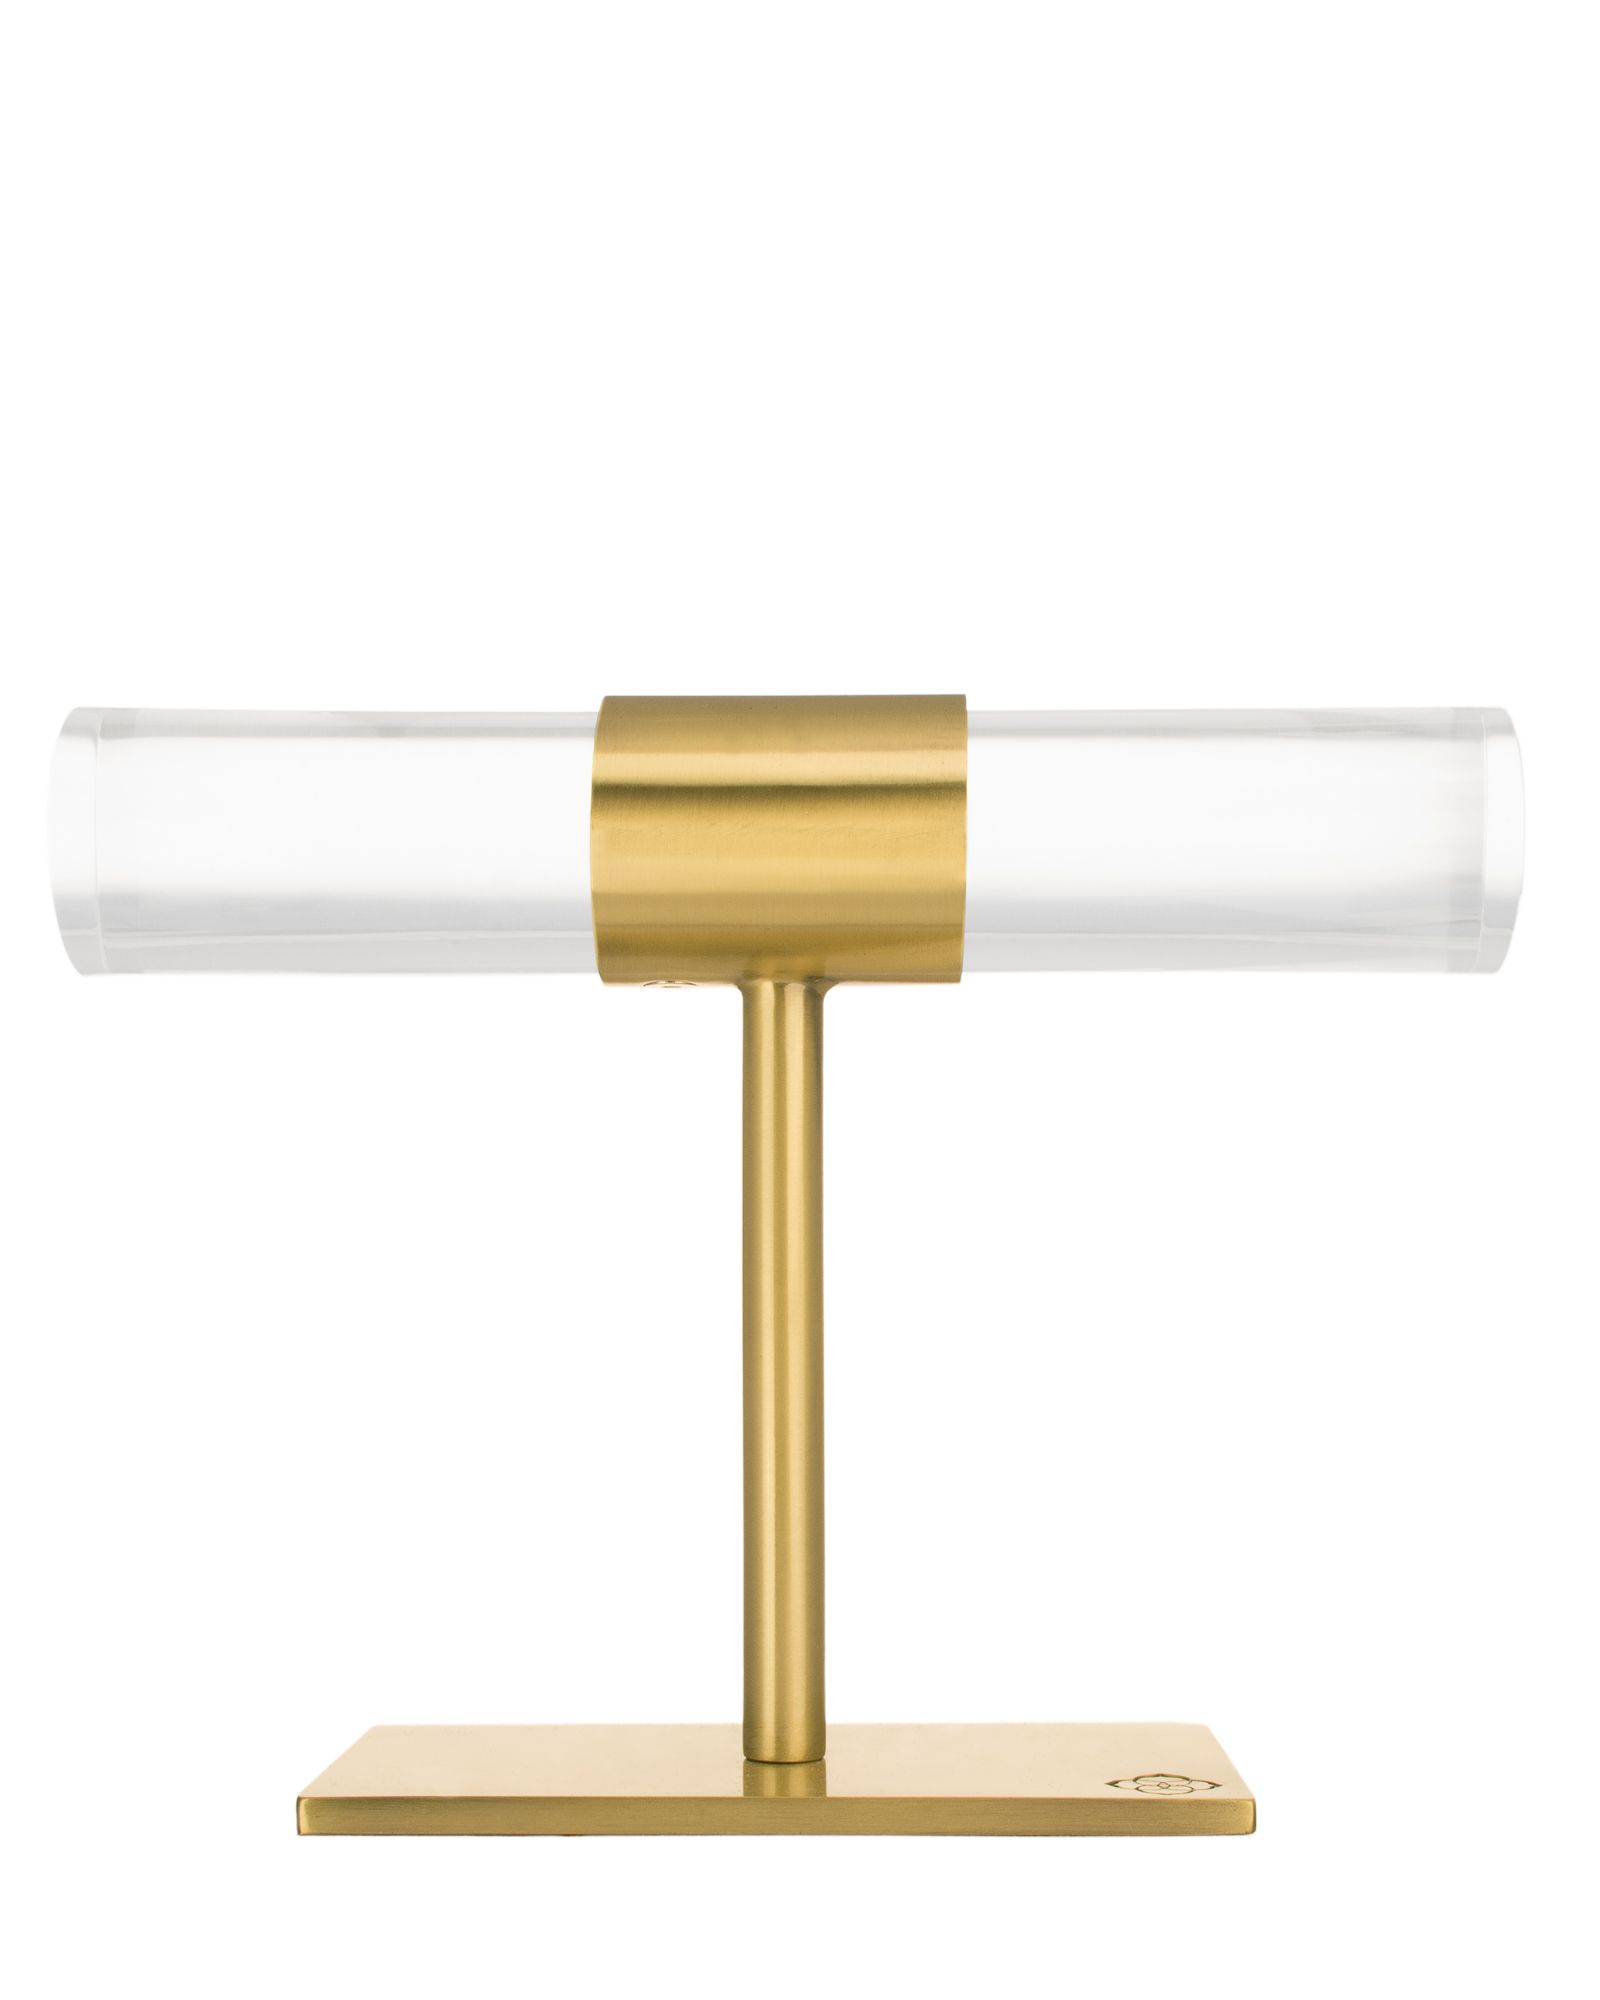 Acrylic T-Bar Jewelry Stand in Brass | Kendra Scott Home | Kendra Scott